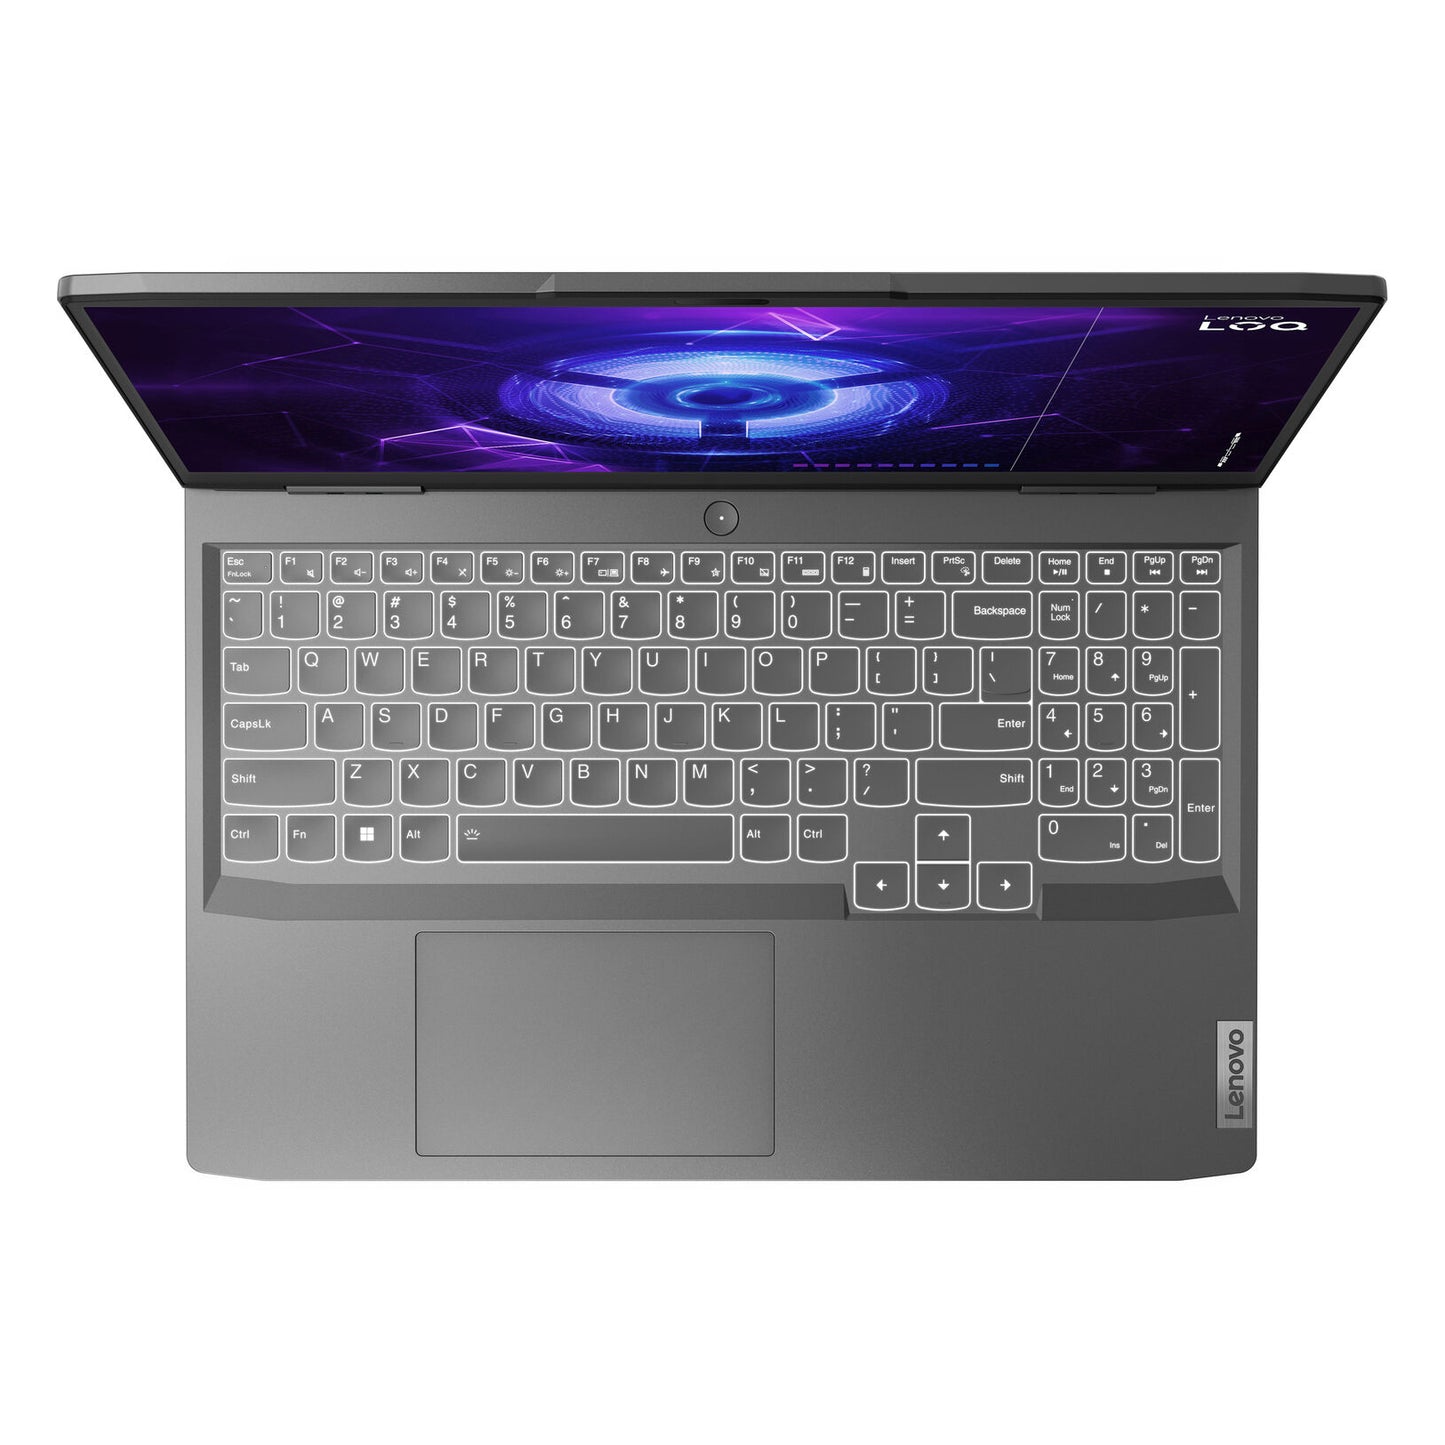 Lenovo LOQ 15IRH8 82XV0089AX Core i7-13620h Rtx 4060 165hz Gaming Laptops (Brand New)